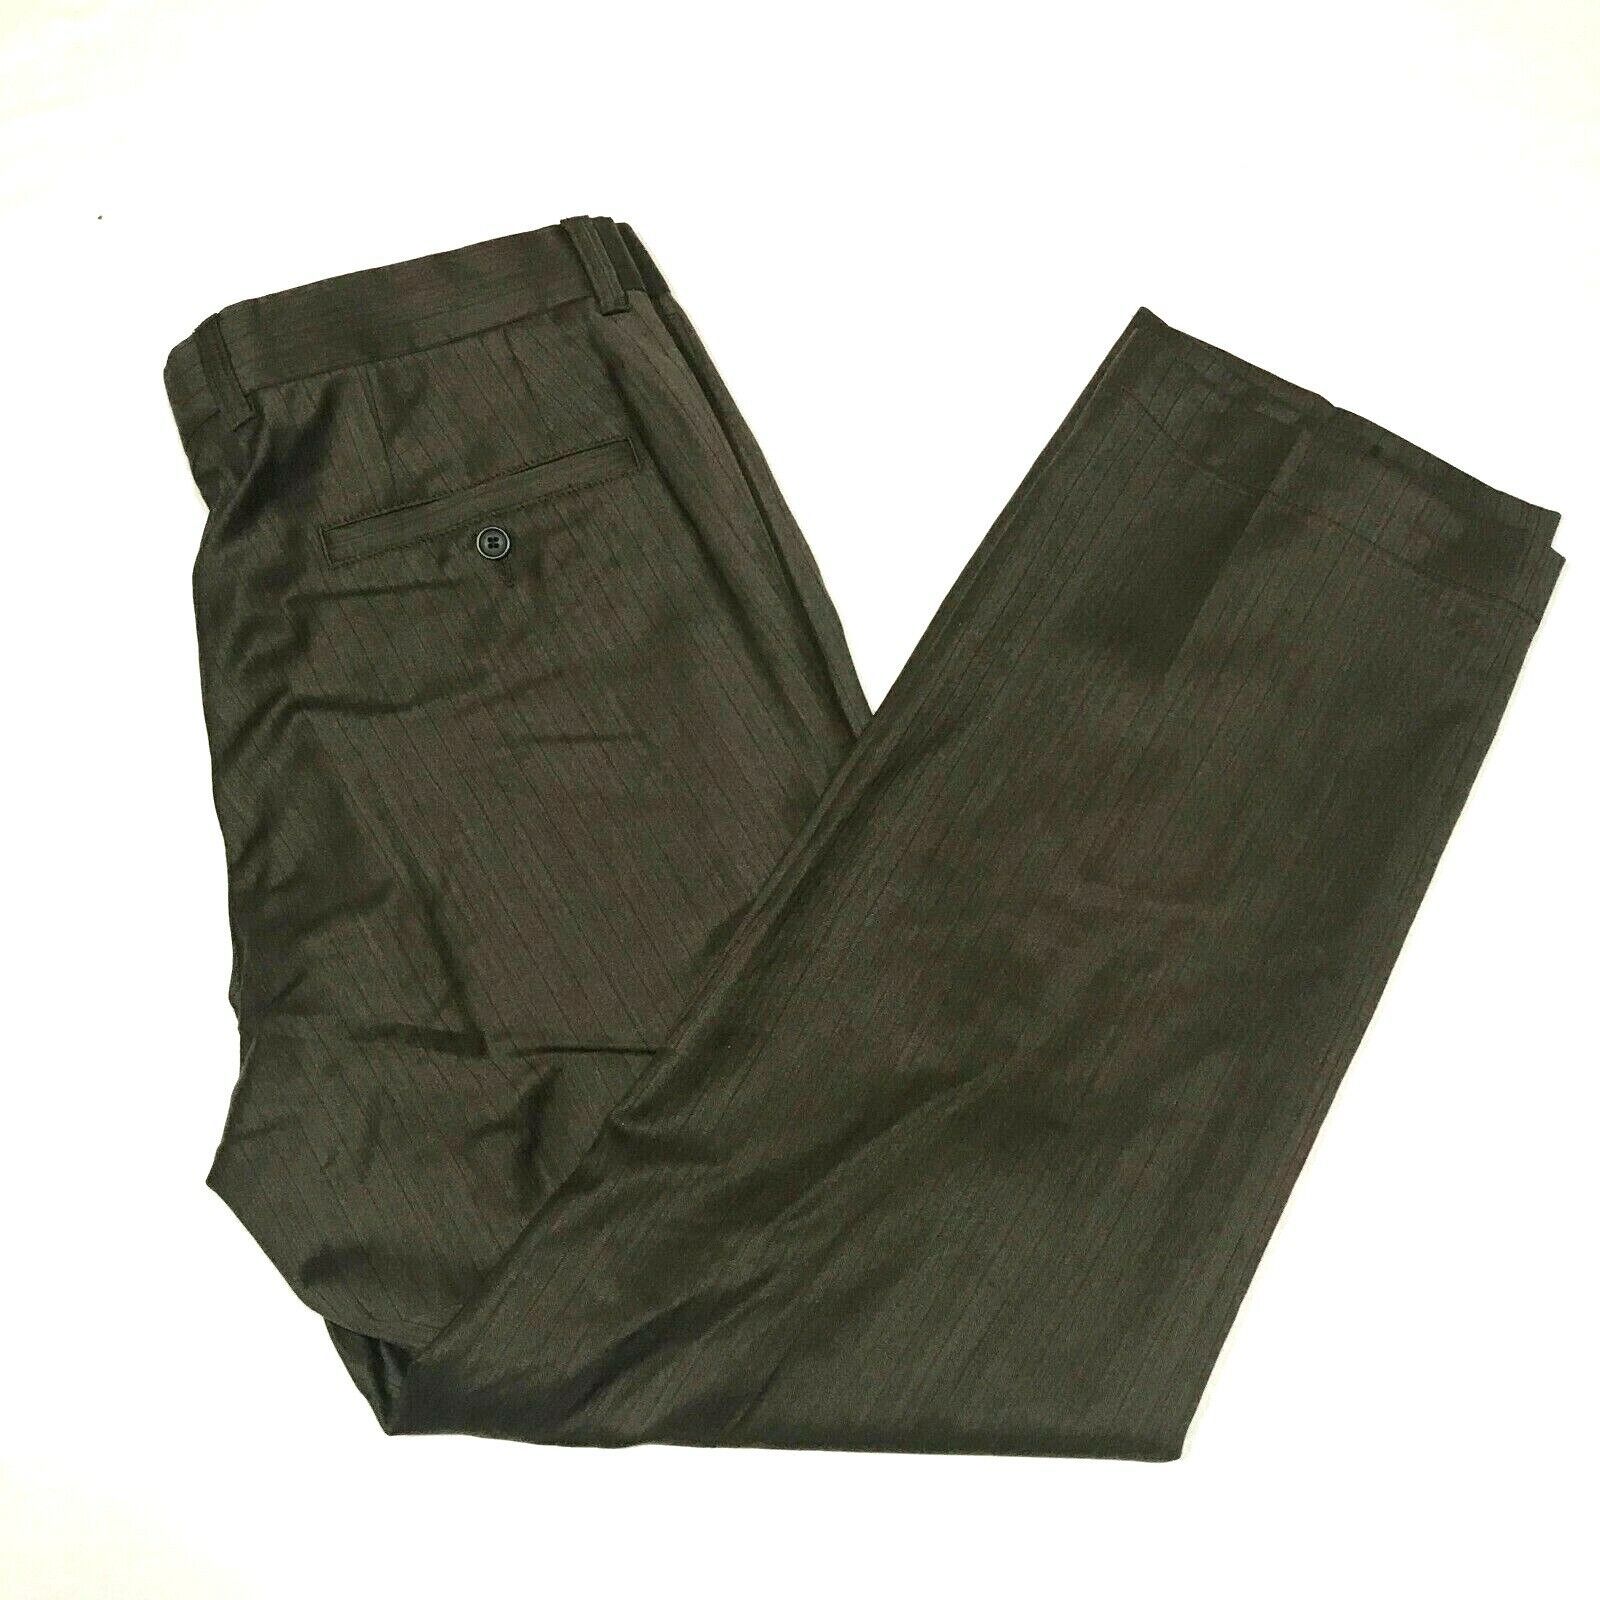 Hugo Boss Dress Pants Trousers 36 R 28 Inseam Brown Herringbone Straight Leg - $22.44